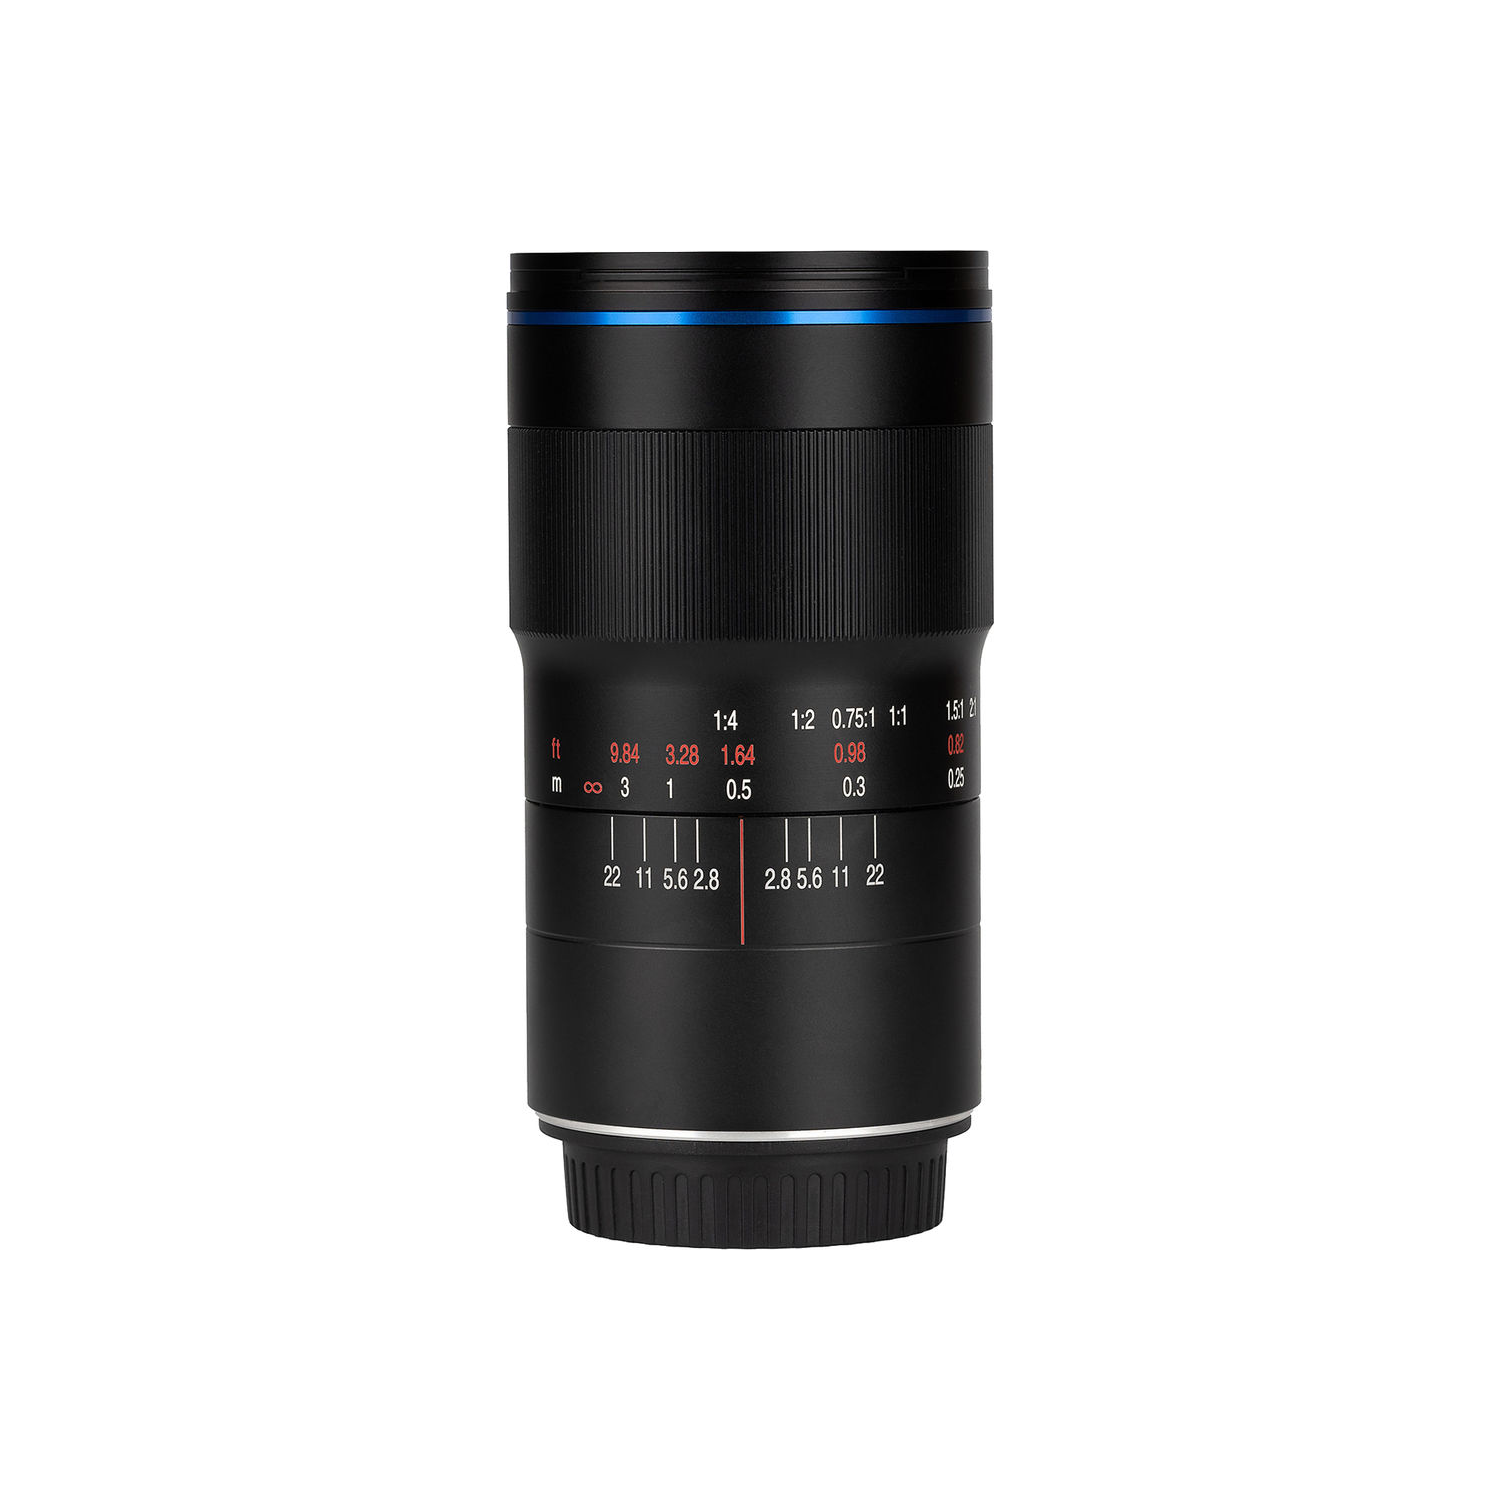 Laowa 100 mm f / 2,8 2x lentille d'apo macro ultra pour Canon RF